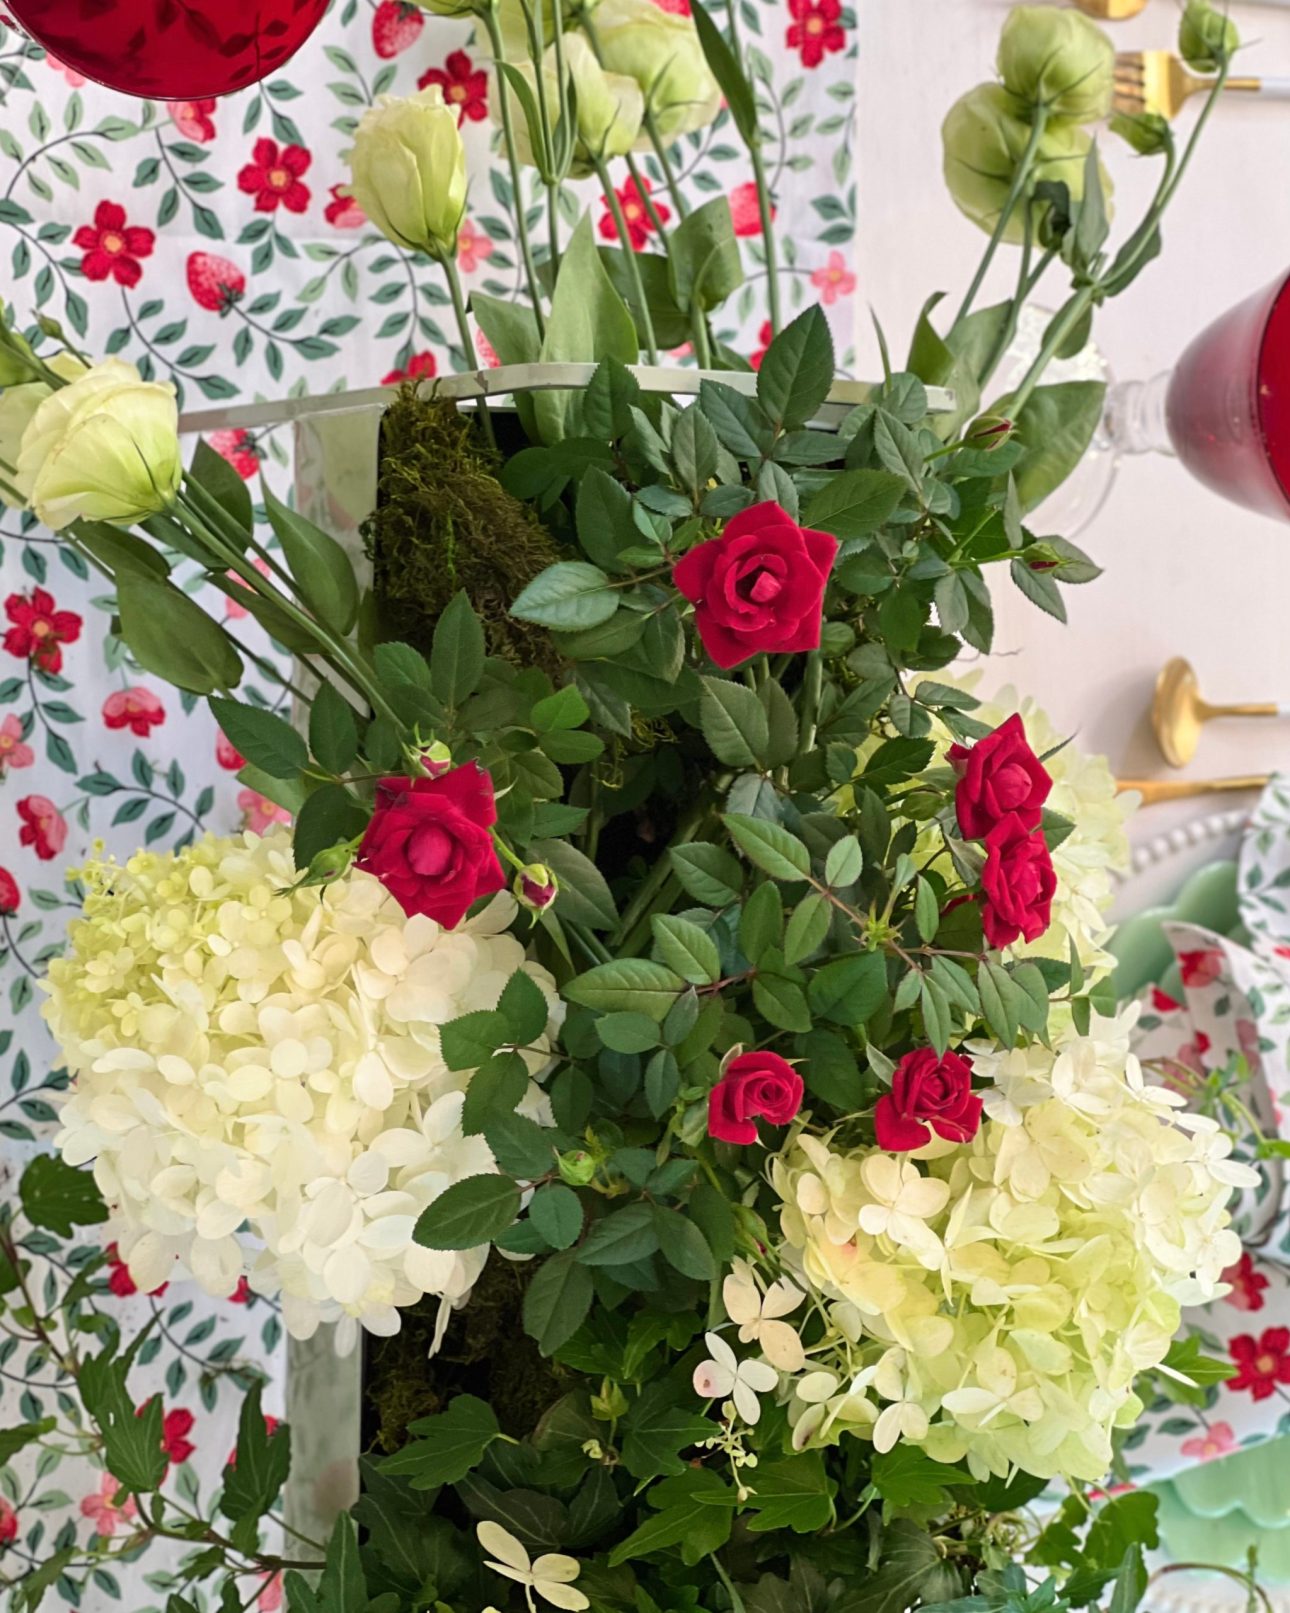 English Ivy & Rose Garden Tablescape